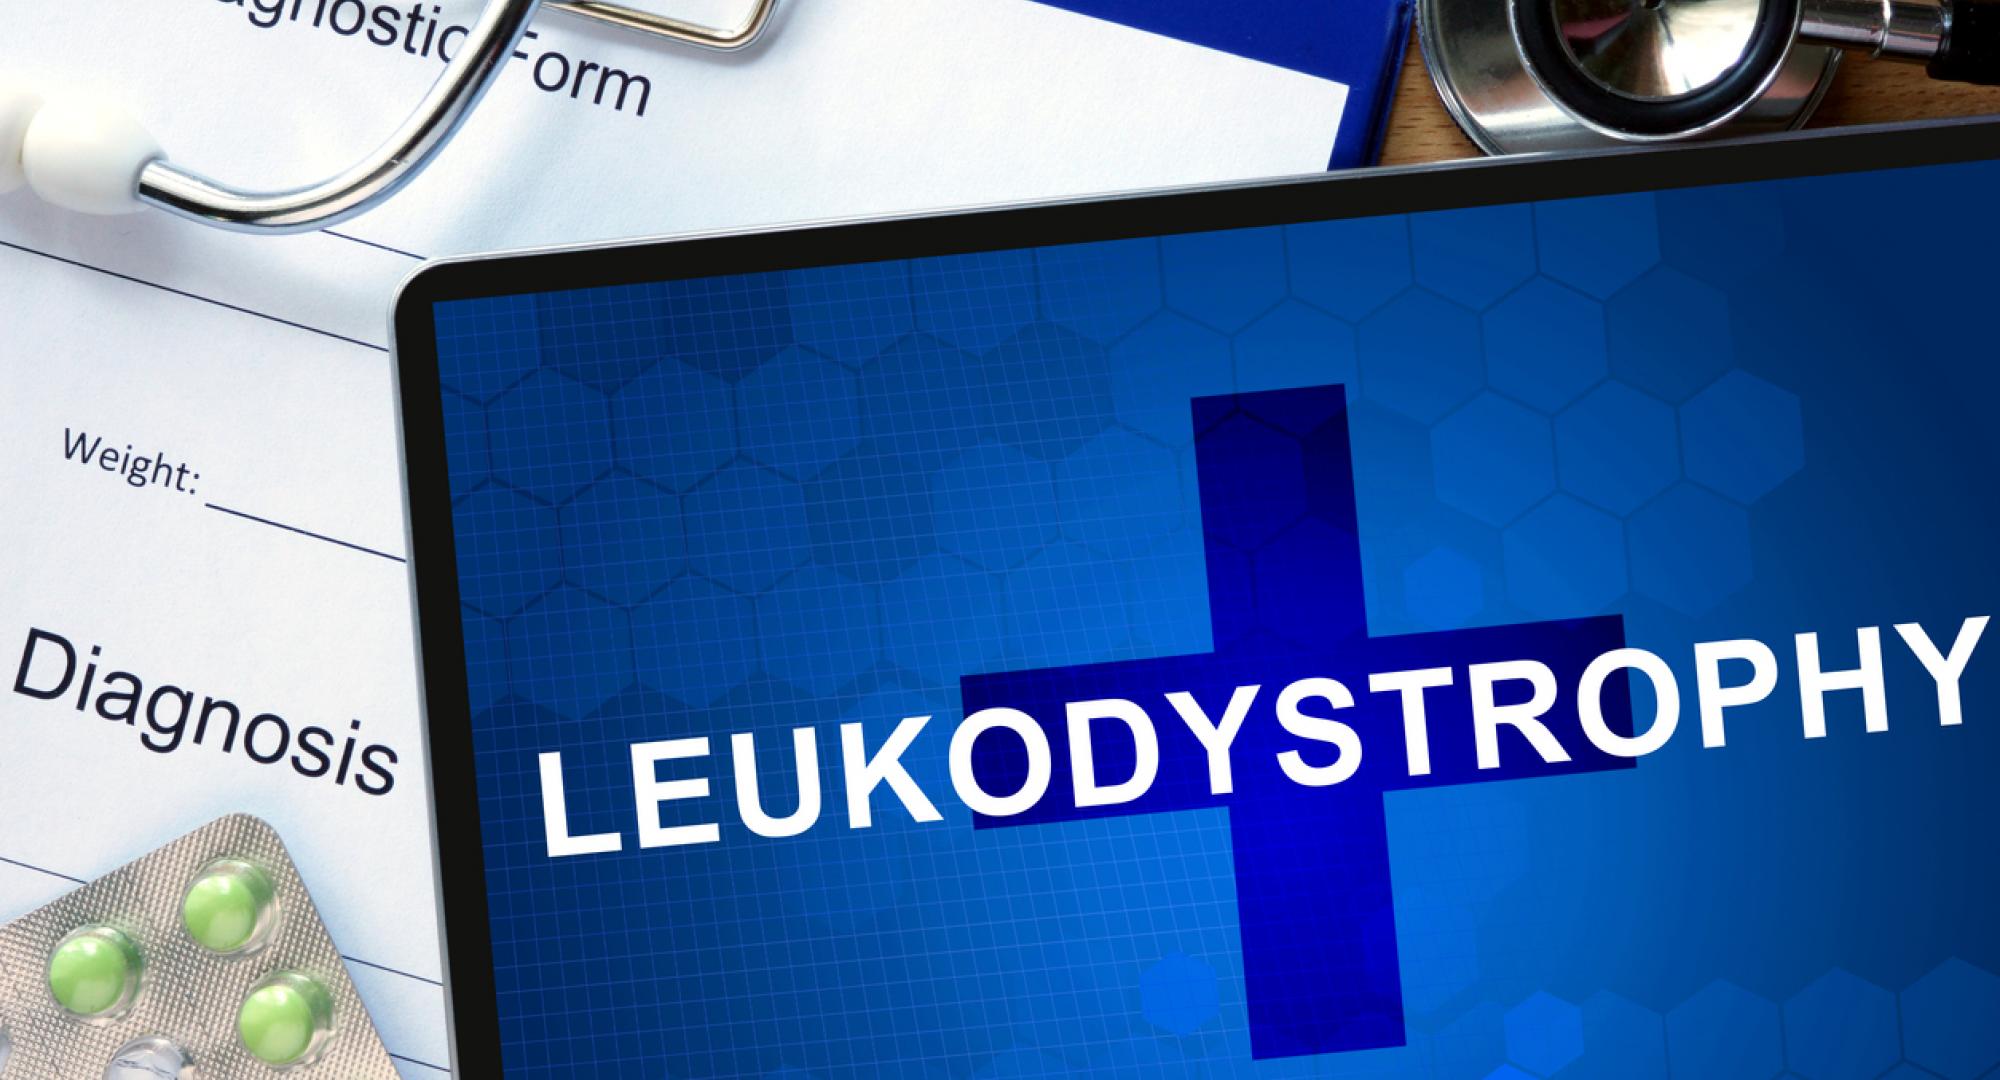 Leukodystrophy diagnostics